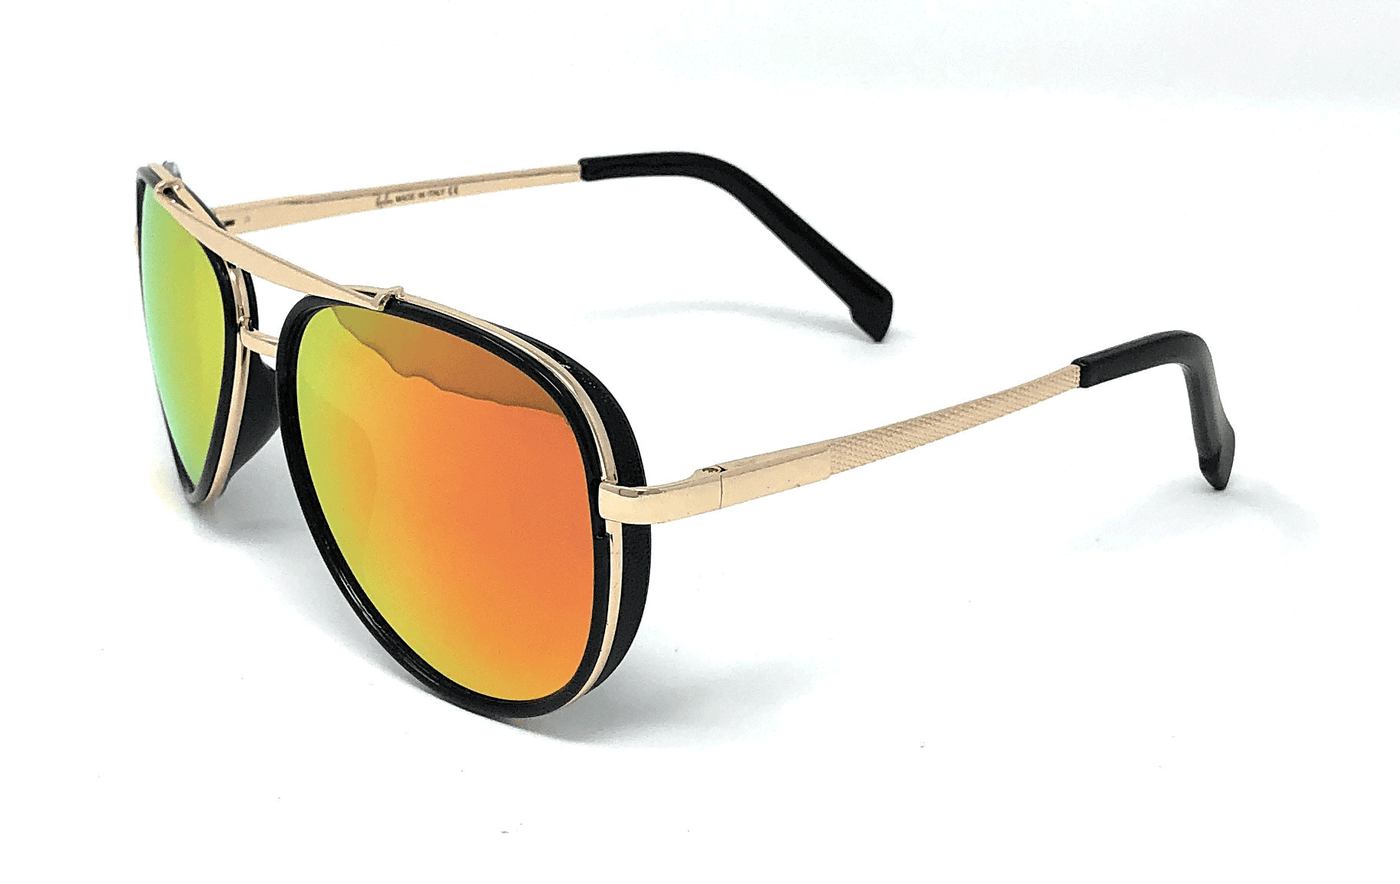 Classic Metal Frame Aviator Orange Mercury Sunglasses For Men And Women-Unique and Classy